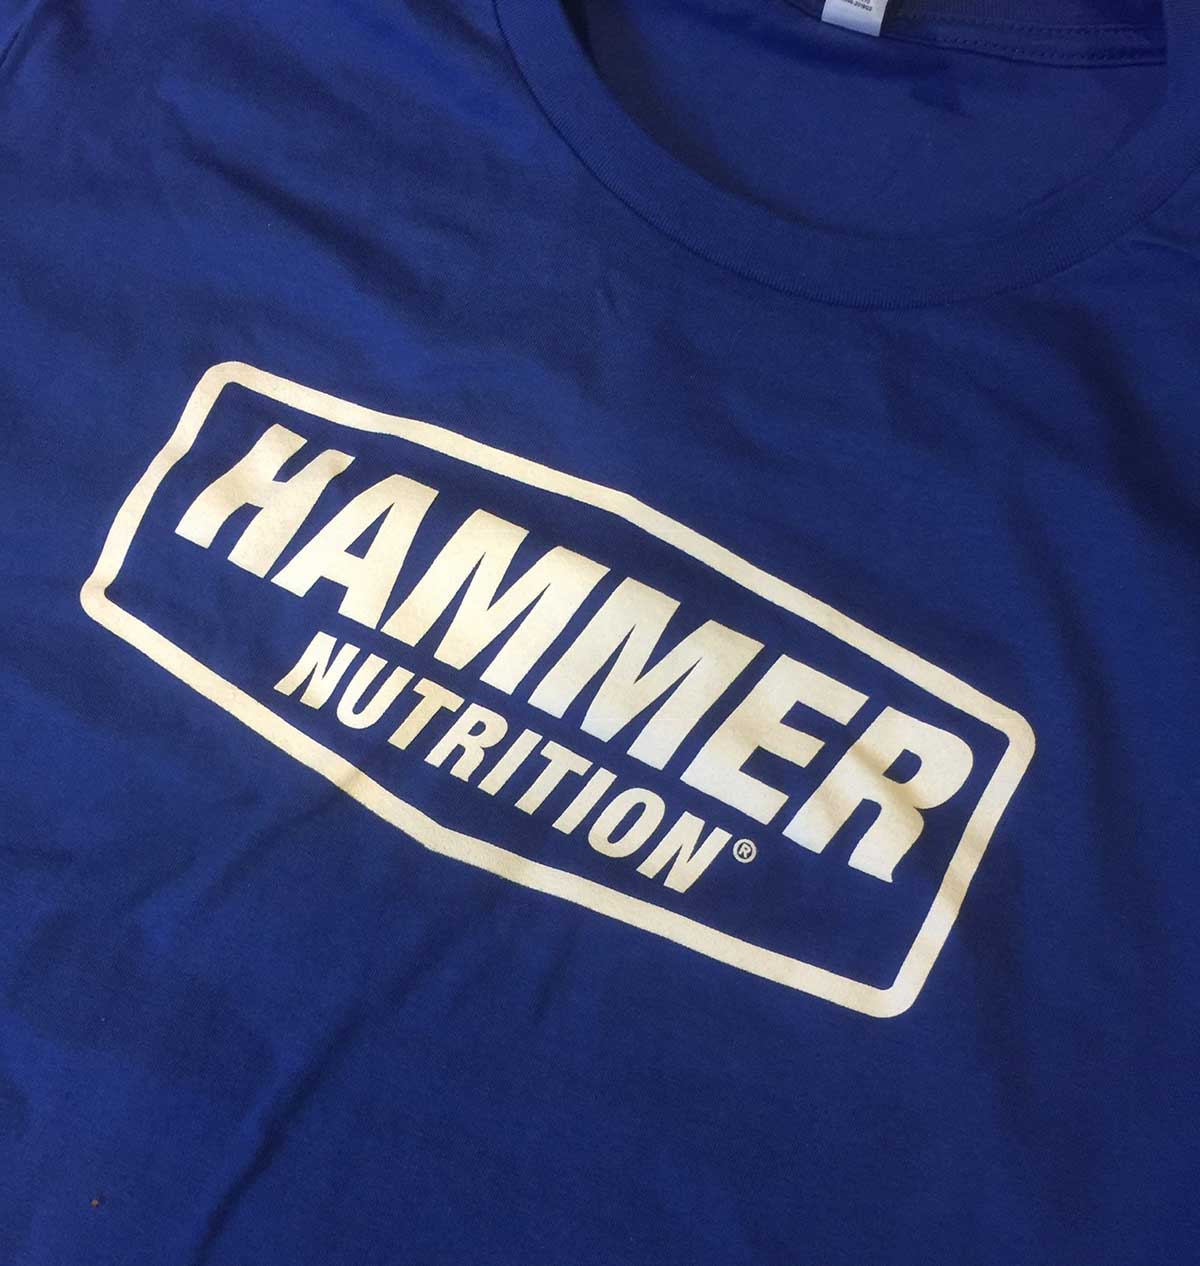 Hammer Nutrition Company T Shirt screen printing shirt